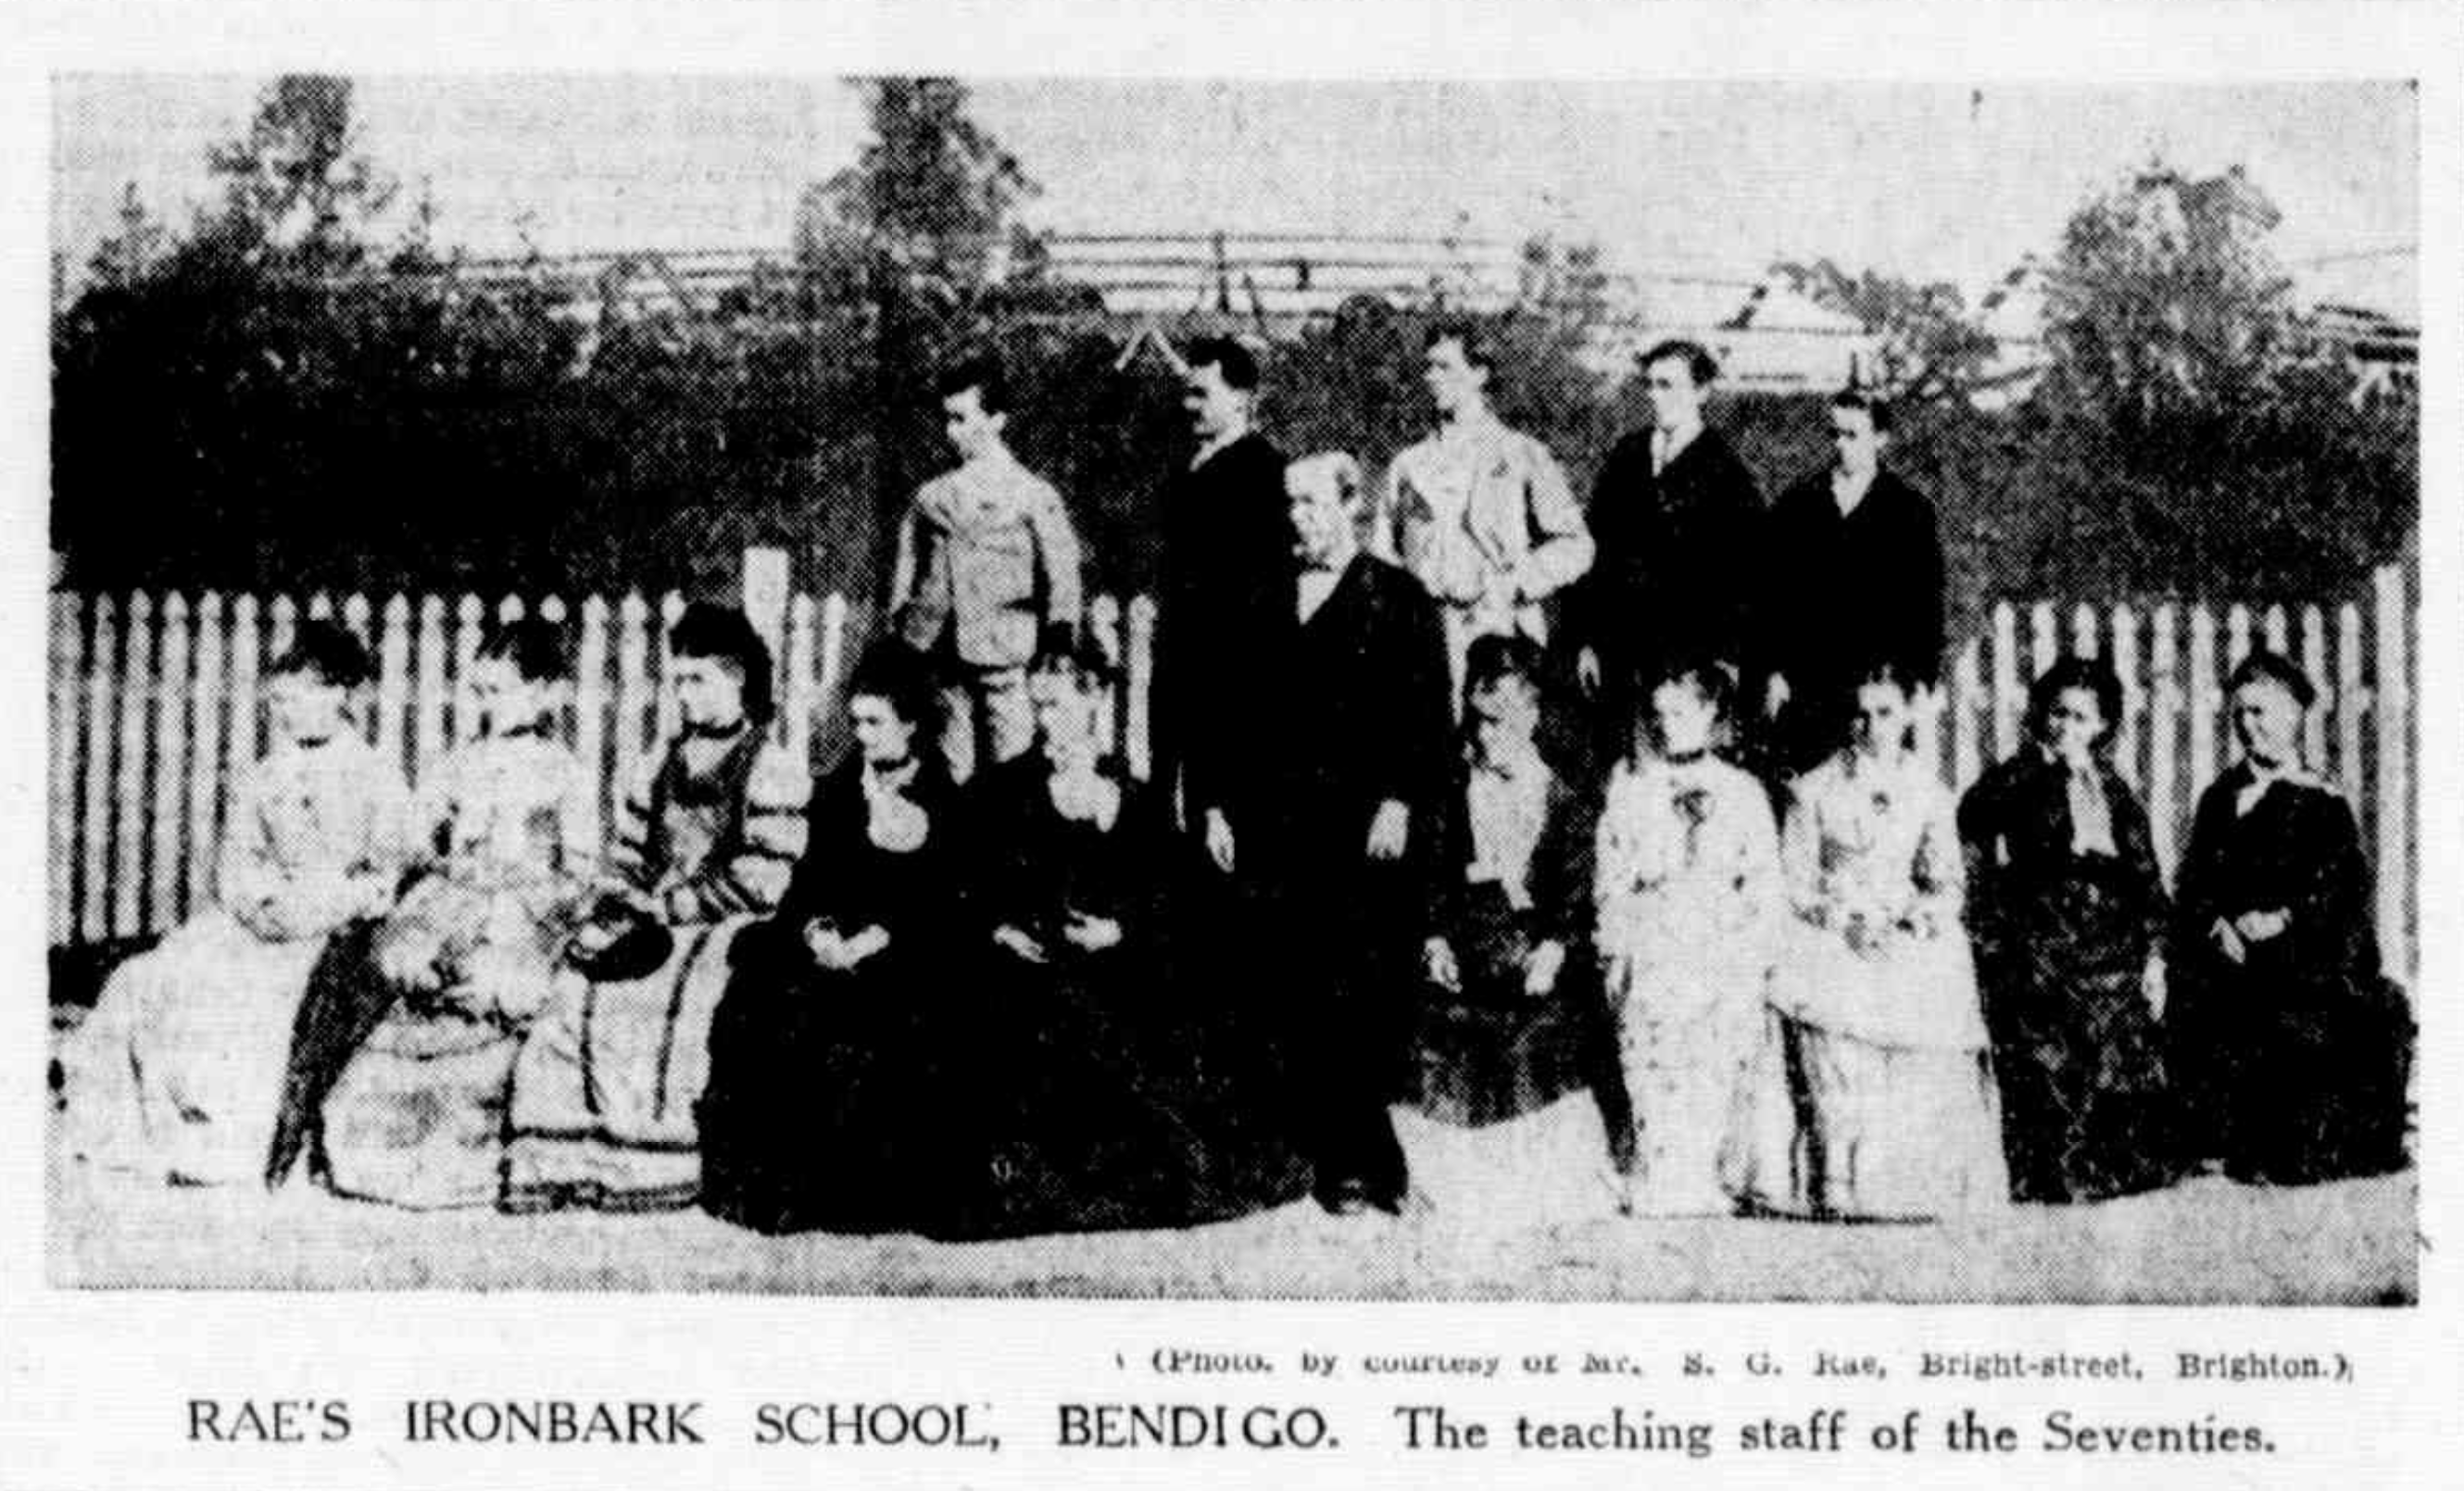 group of people with caption below that says: Rae's Ironbark School, Bendigo. The teaching staff of the seventies